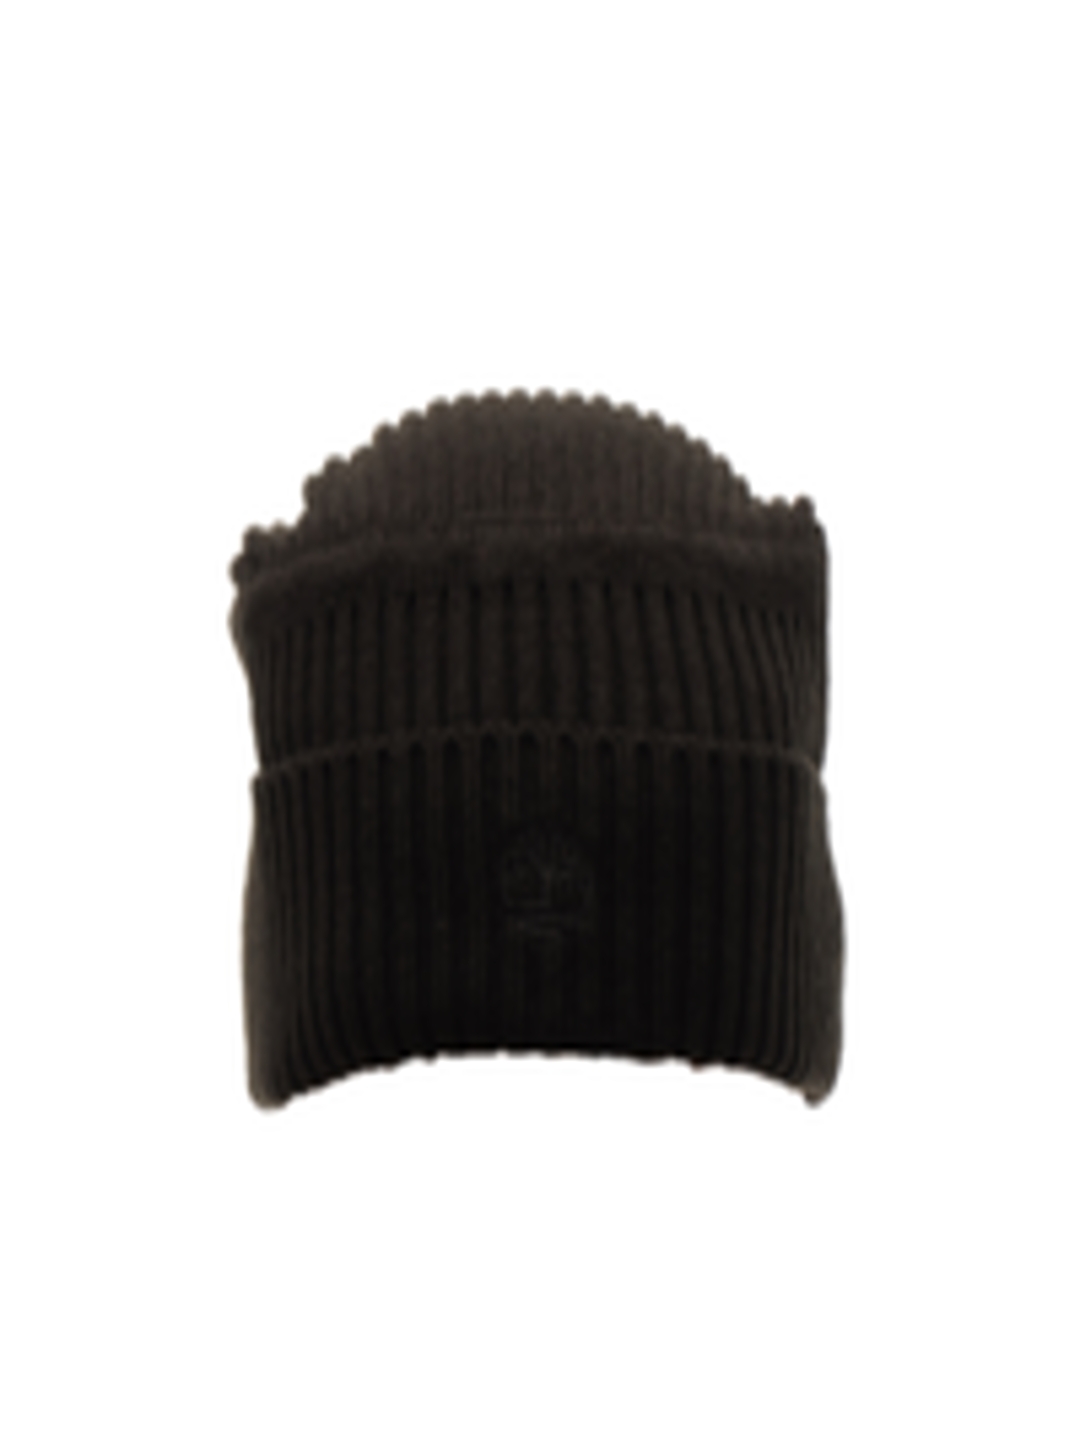 Buy Timberland Unisex Casual Black Skull Caps - Hat for Unisex 12440 ...